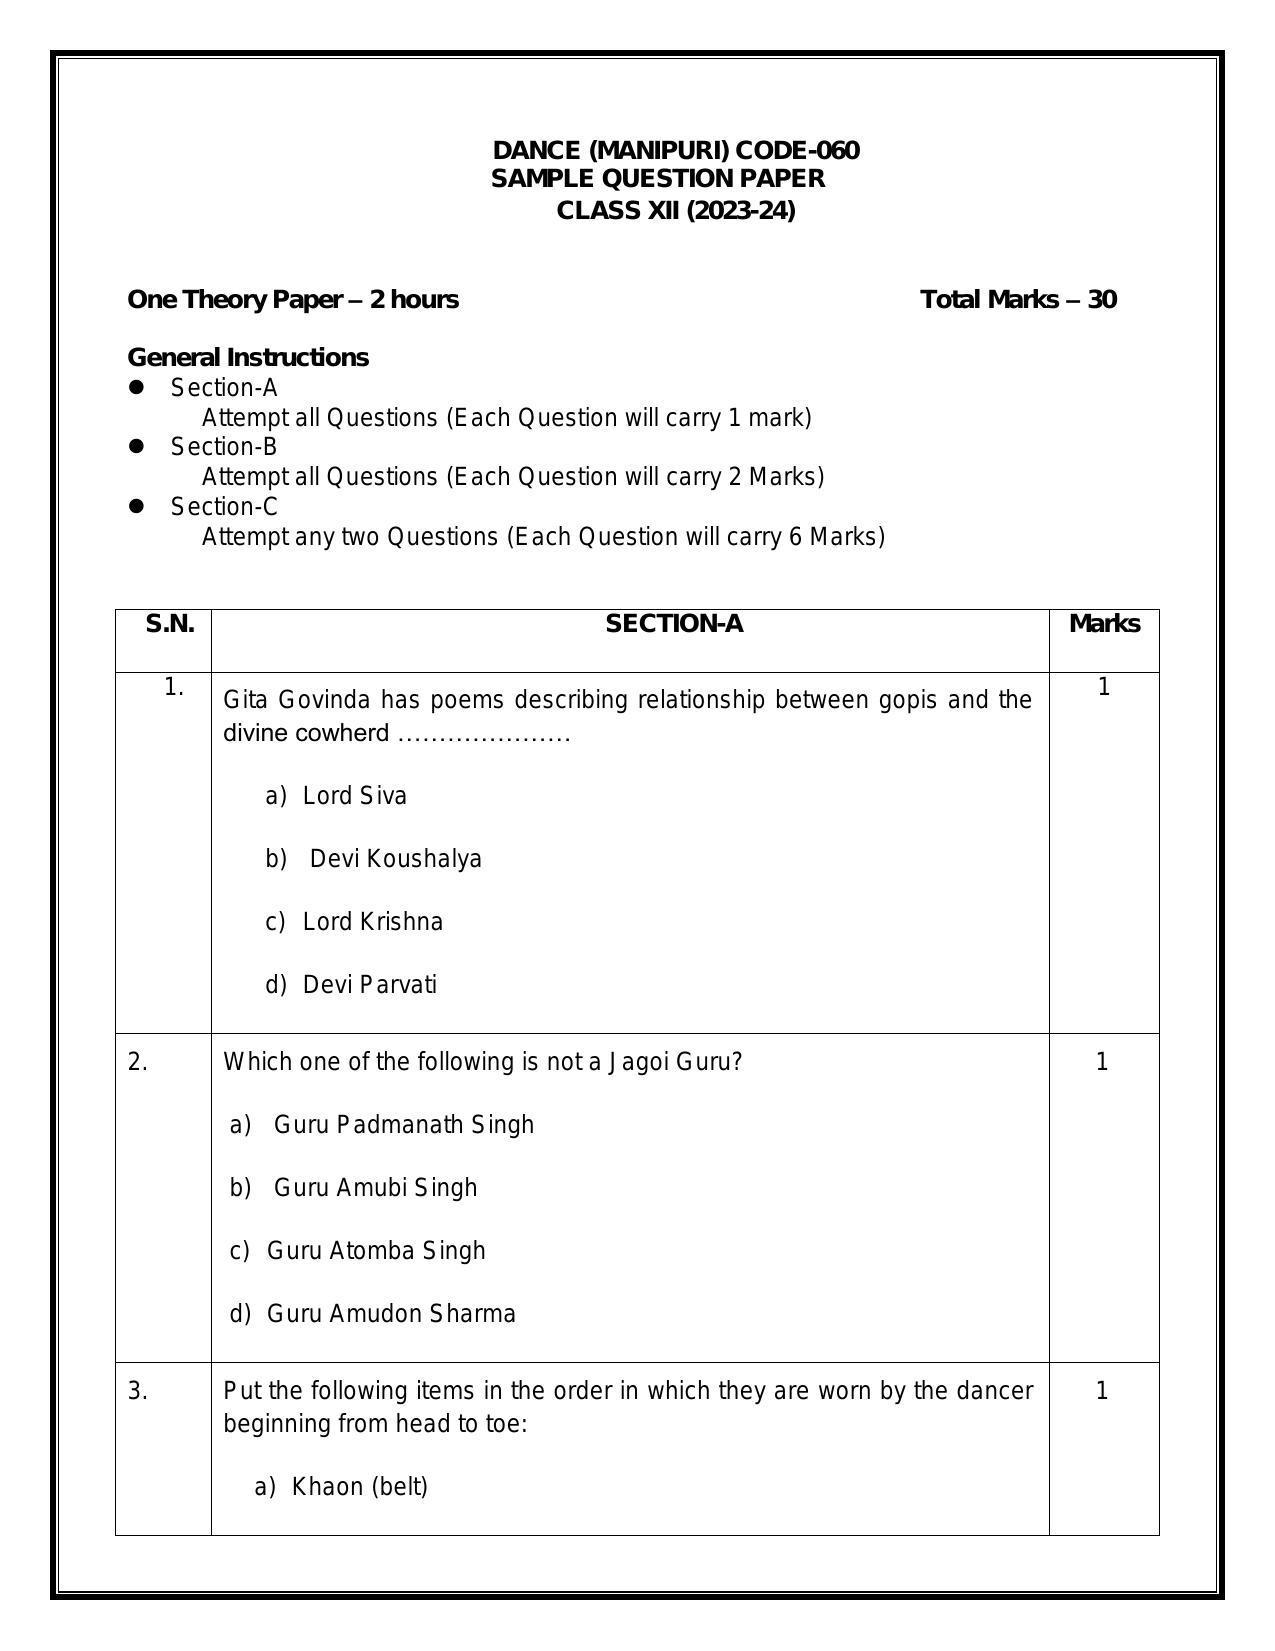 CBSE Class 12 Dance Manipuri Sample Paper 2024 - Page 1